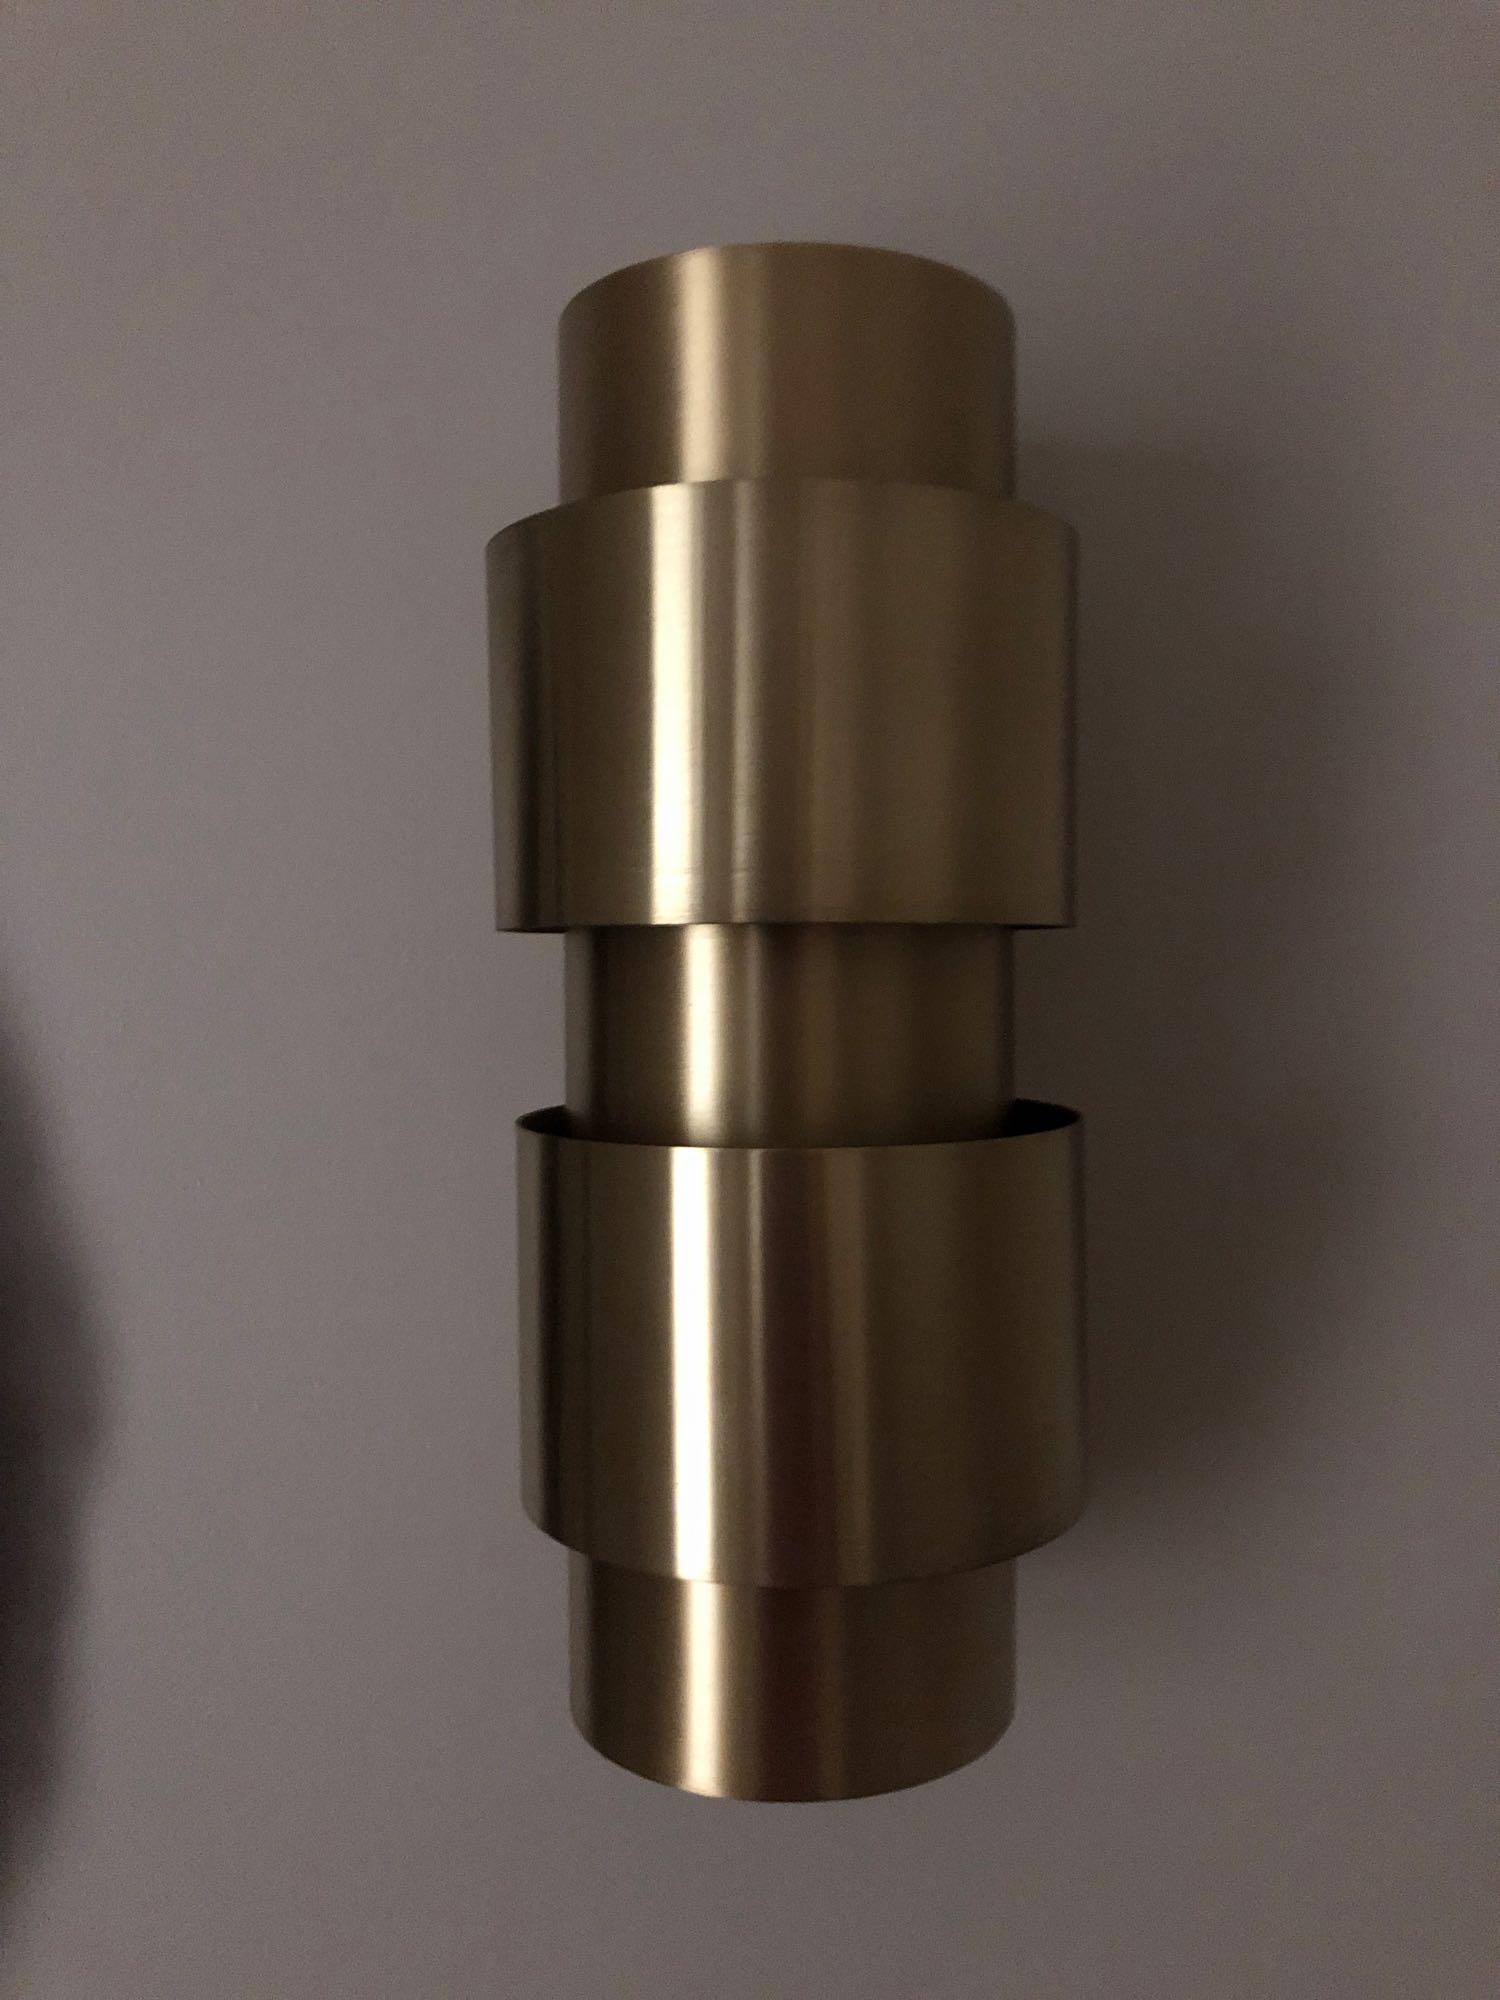 2 x LED Antique Brass 2 Light Indoor Wall Light Antique Brass 30CM (Room 232) - Image 2 of 2